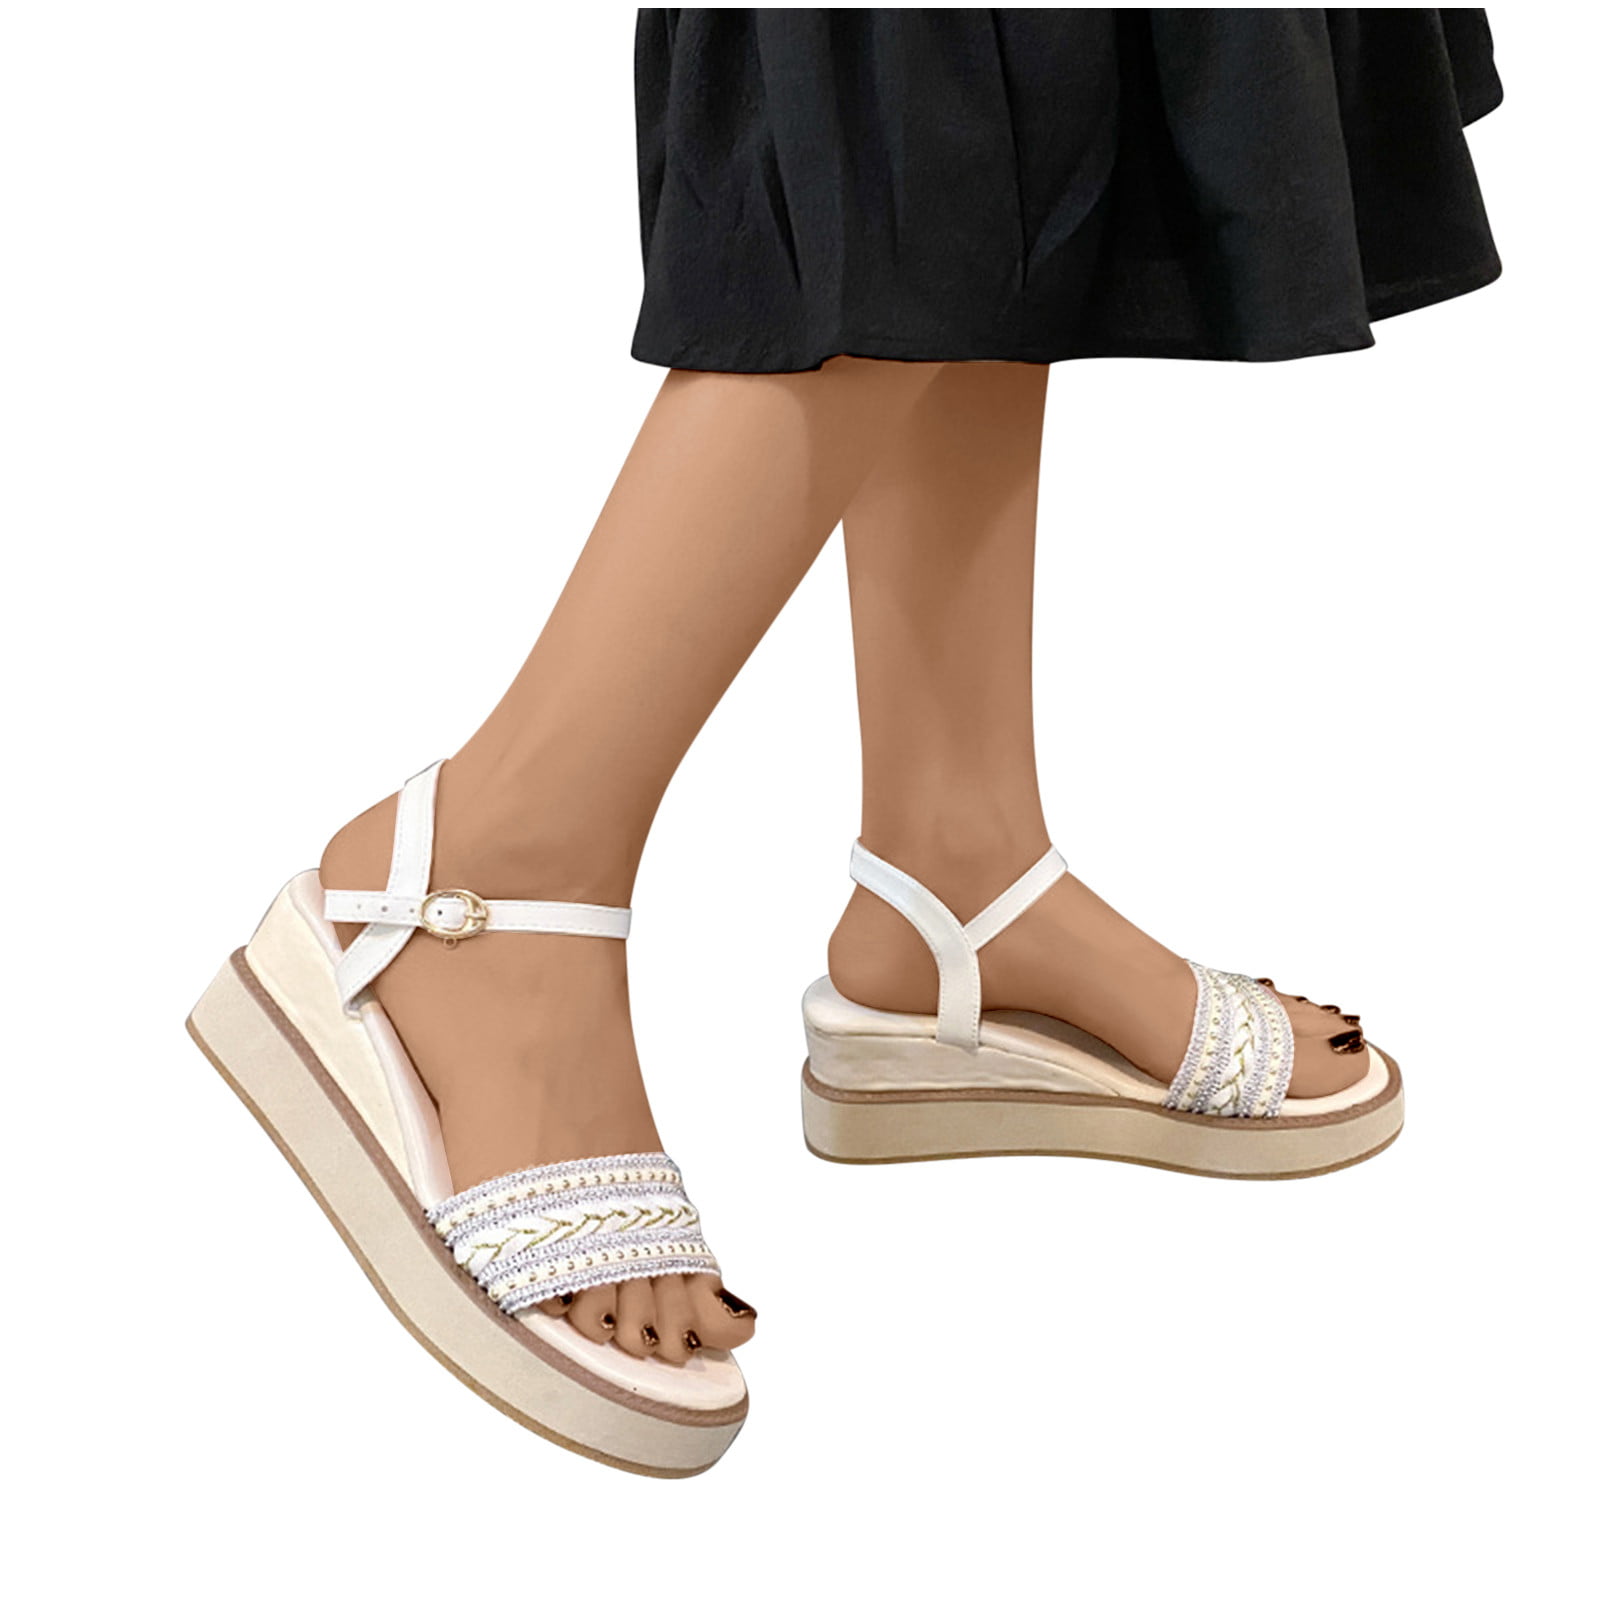 HAOTAGS Womens Fashion Wedge Sandals- Buckle Strap Single Band